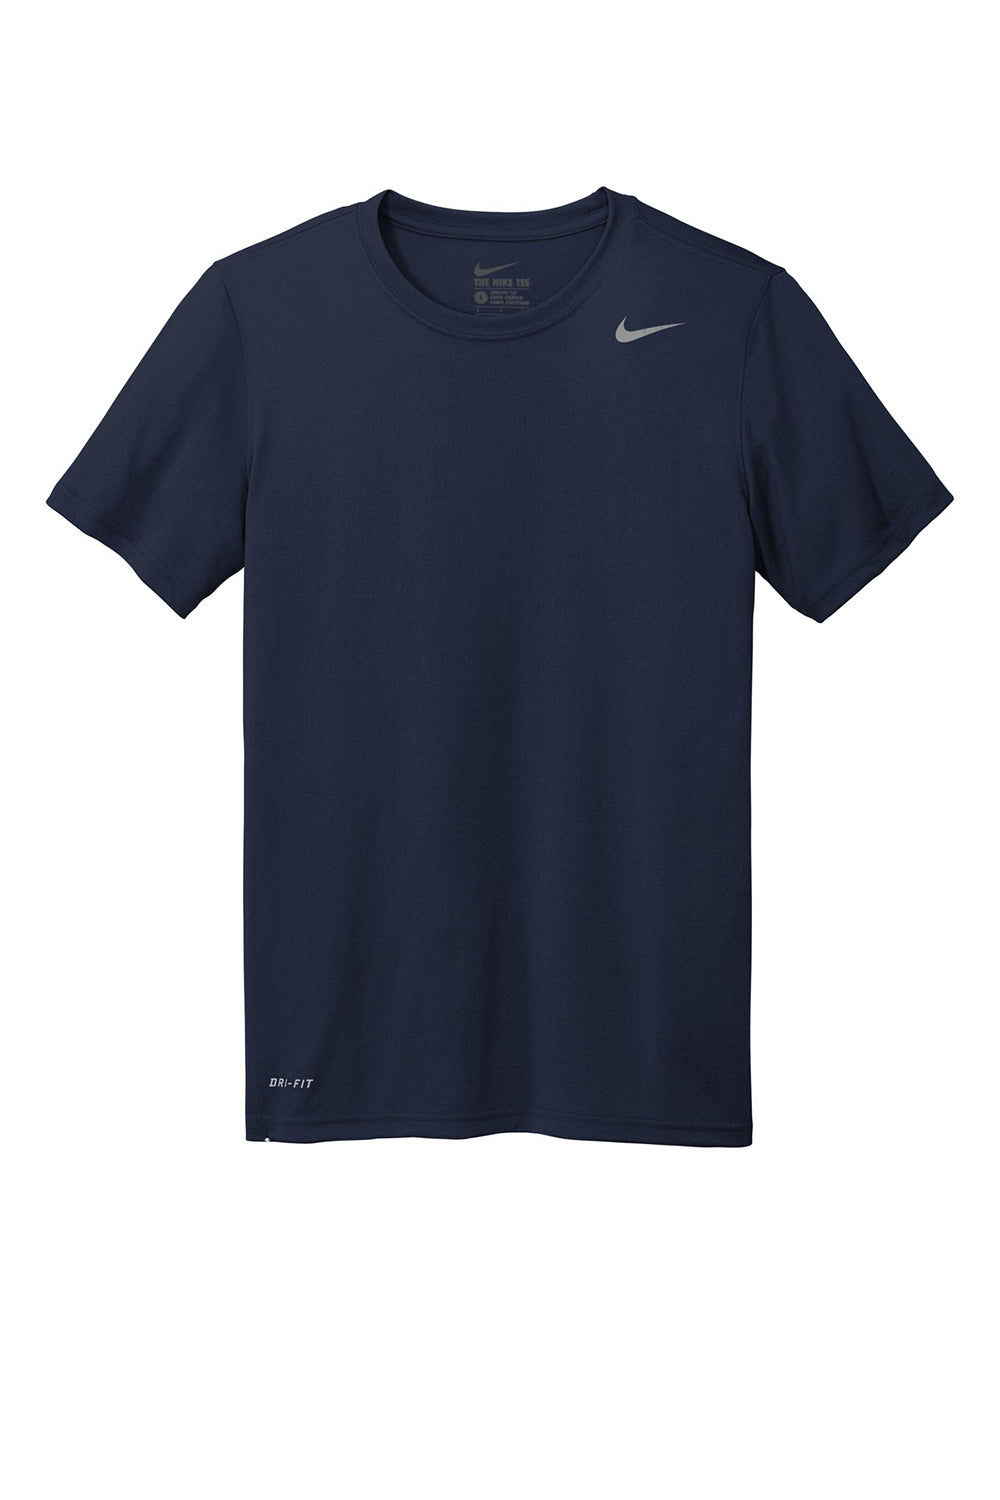 Nike 727982 Mens Legend Dri-Fit Moisture Wicking Short Sleeve Crewneck T-Shirt College Navy Blue Flat Front